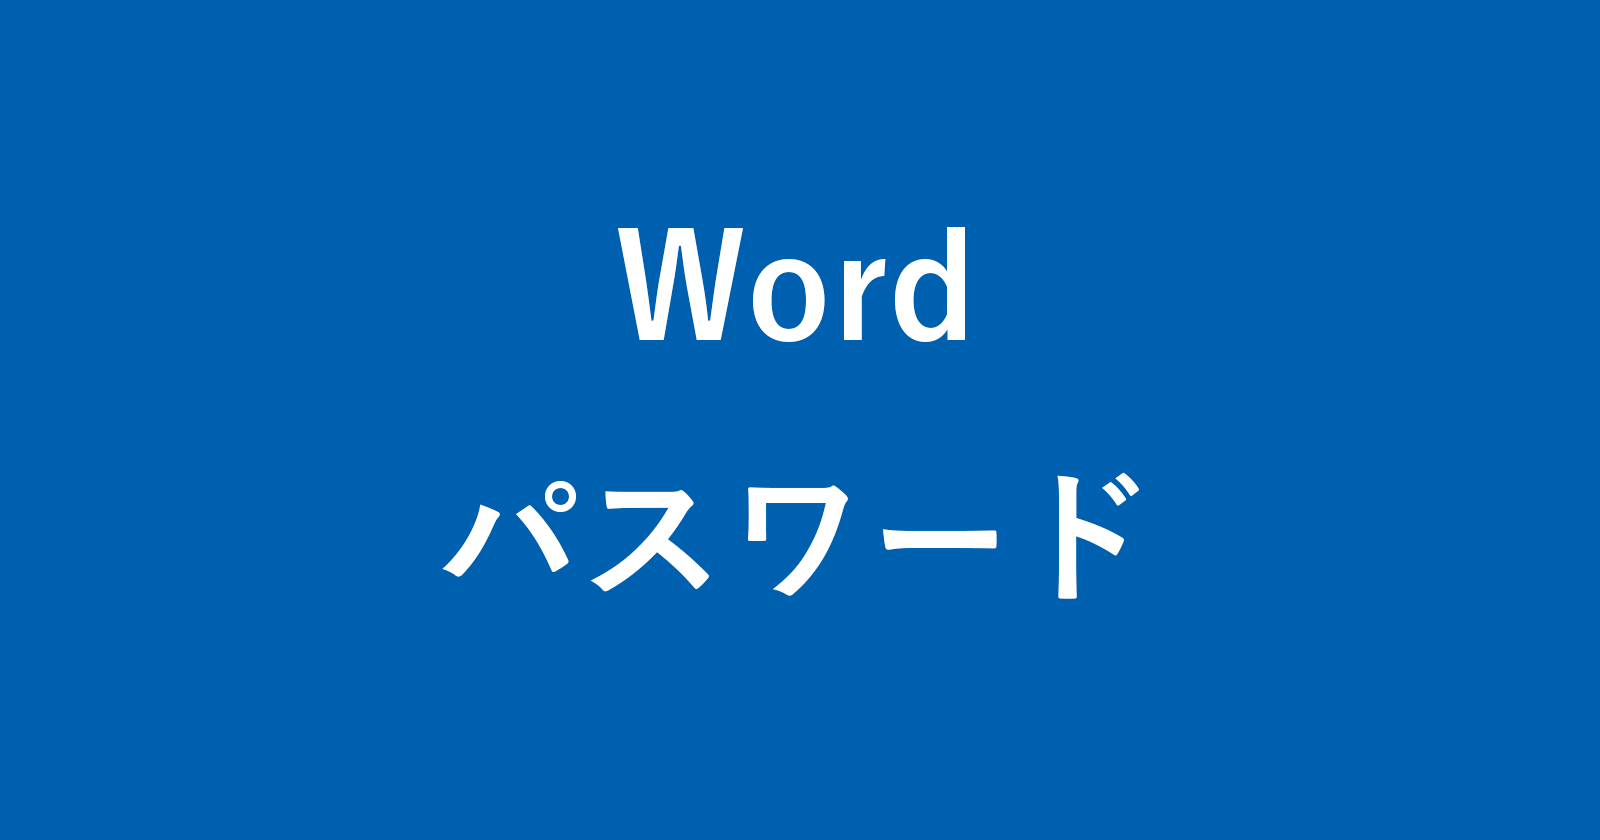 word password